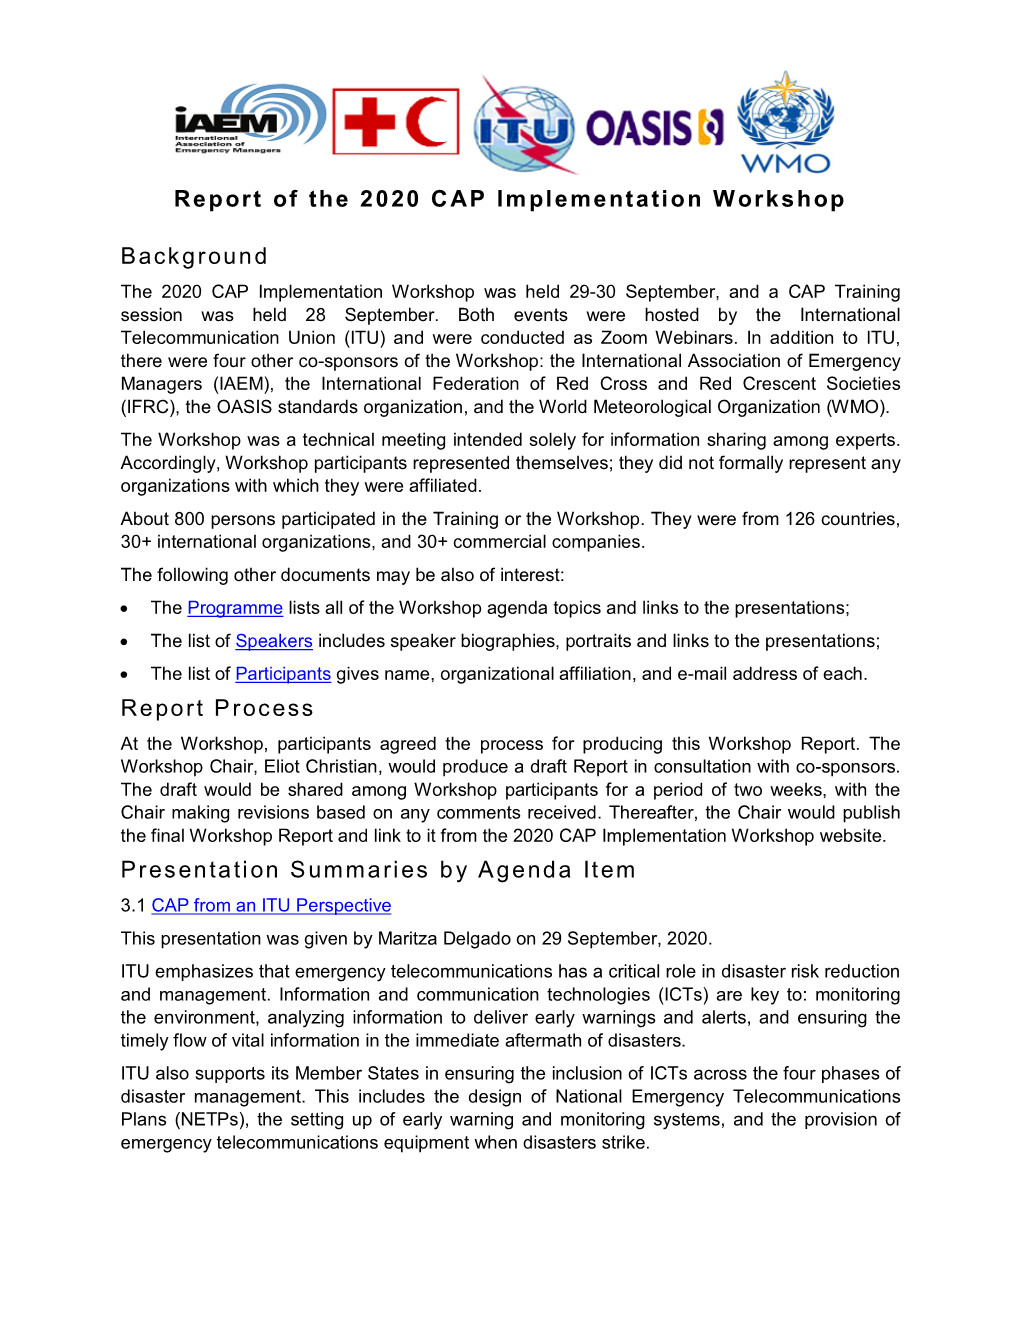 Report of the 2017 CAP Implementation Workshop